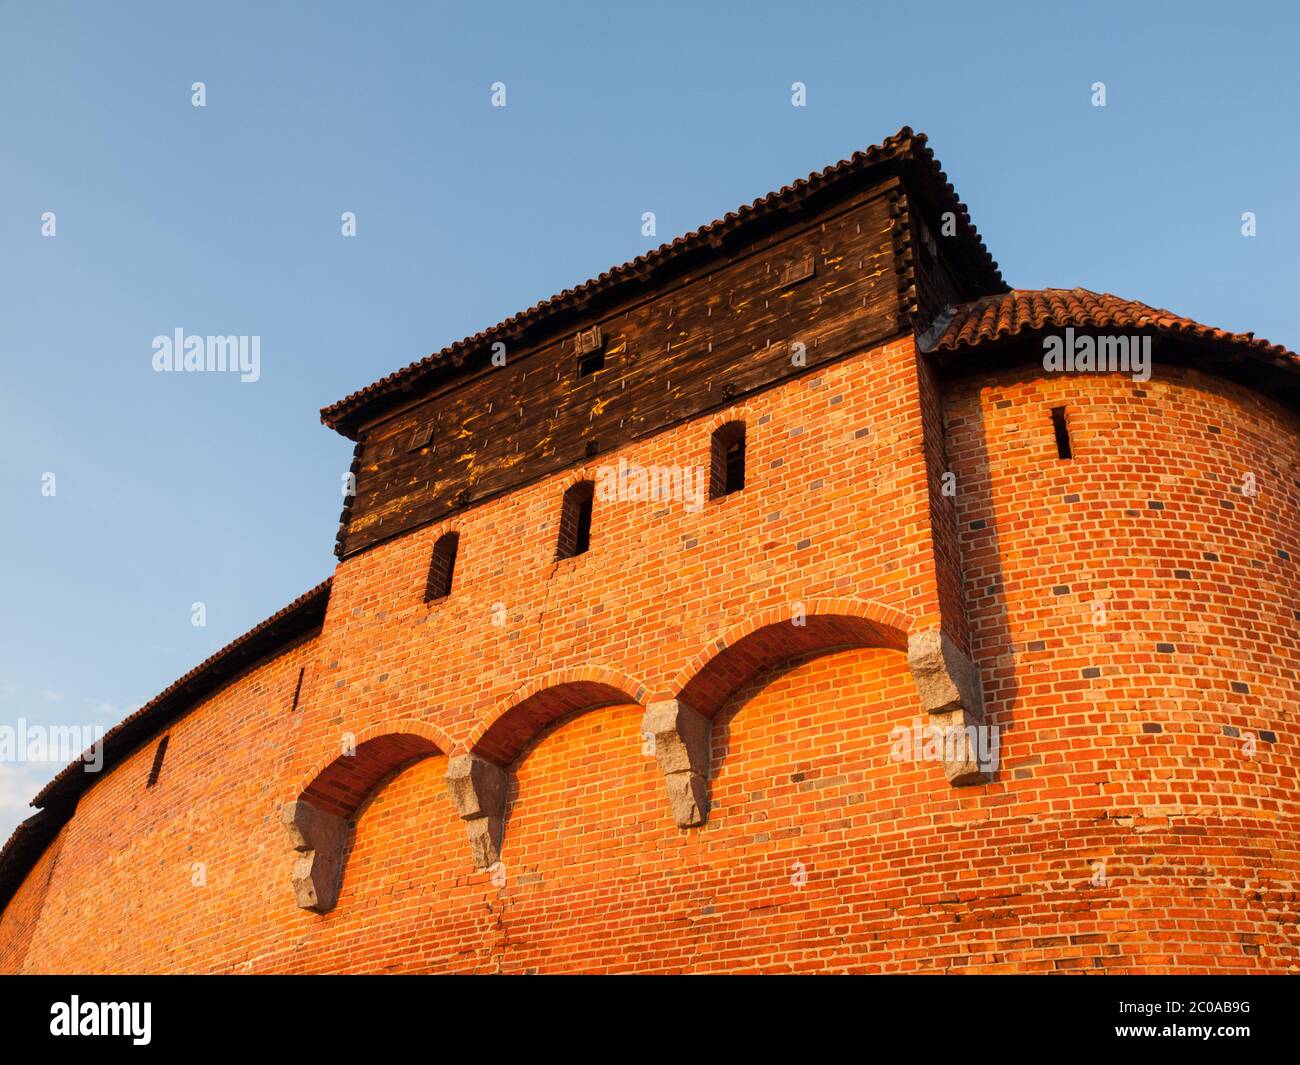 Guard tower of Teutonic Malbork Castle, Pomerania region, Poland Stock Photo